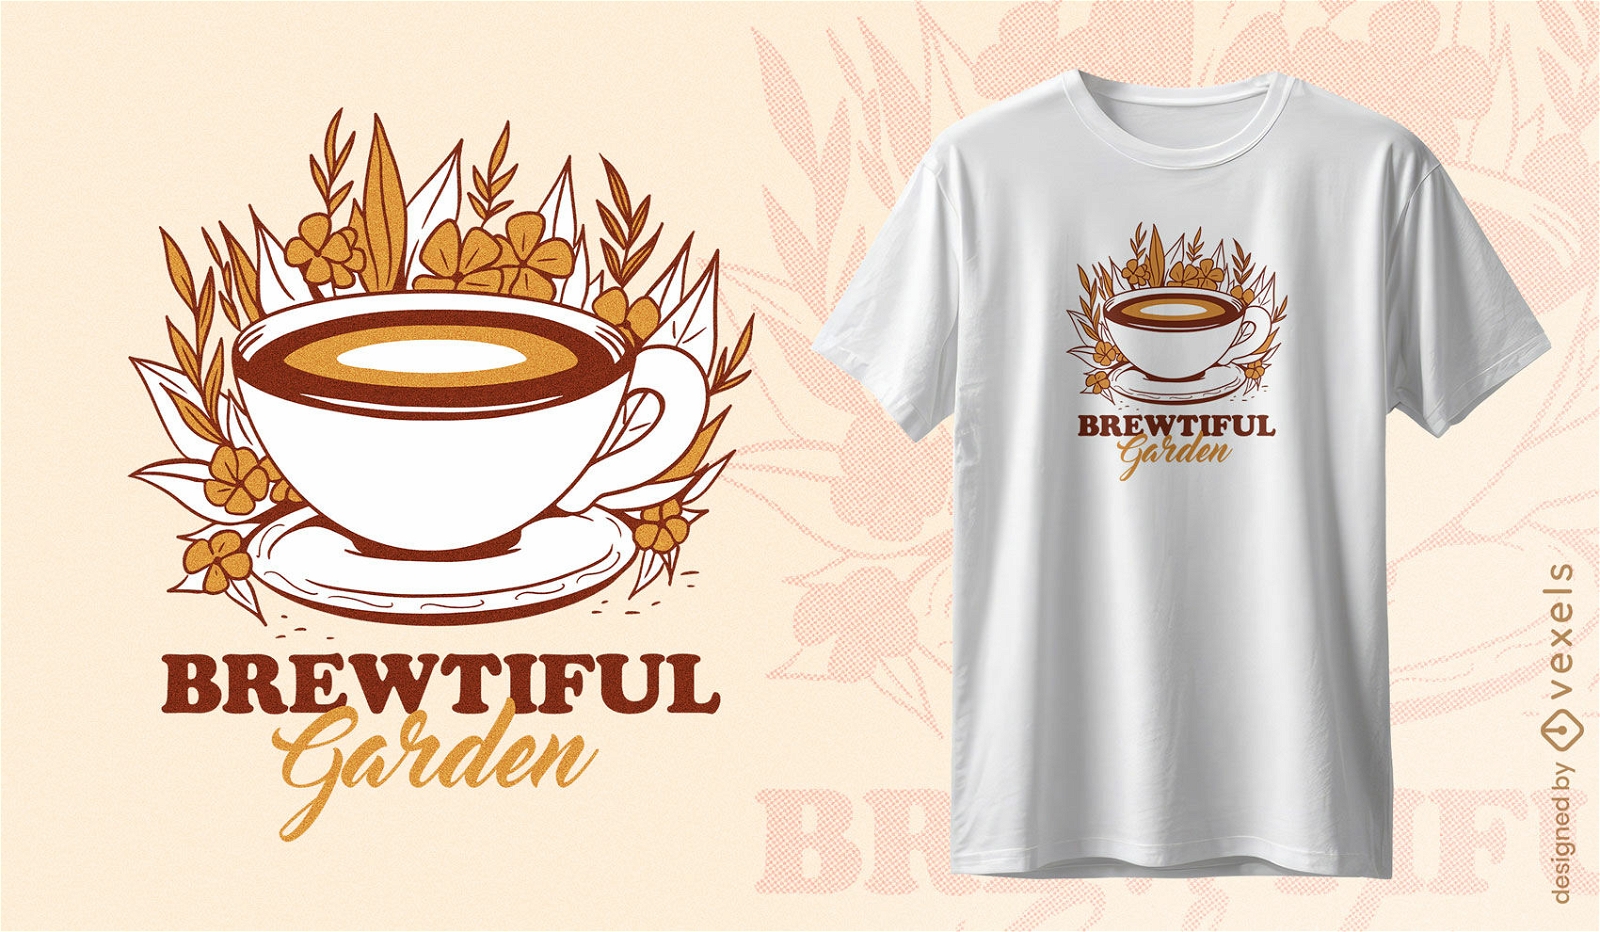 Brewtiful garden t-shirt design